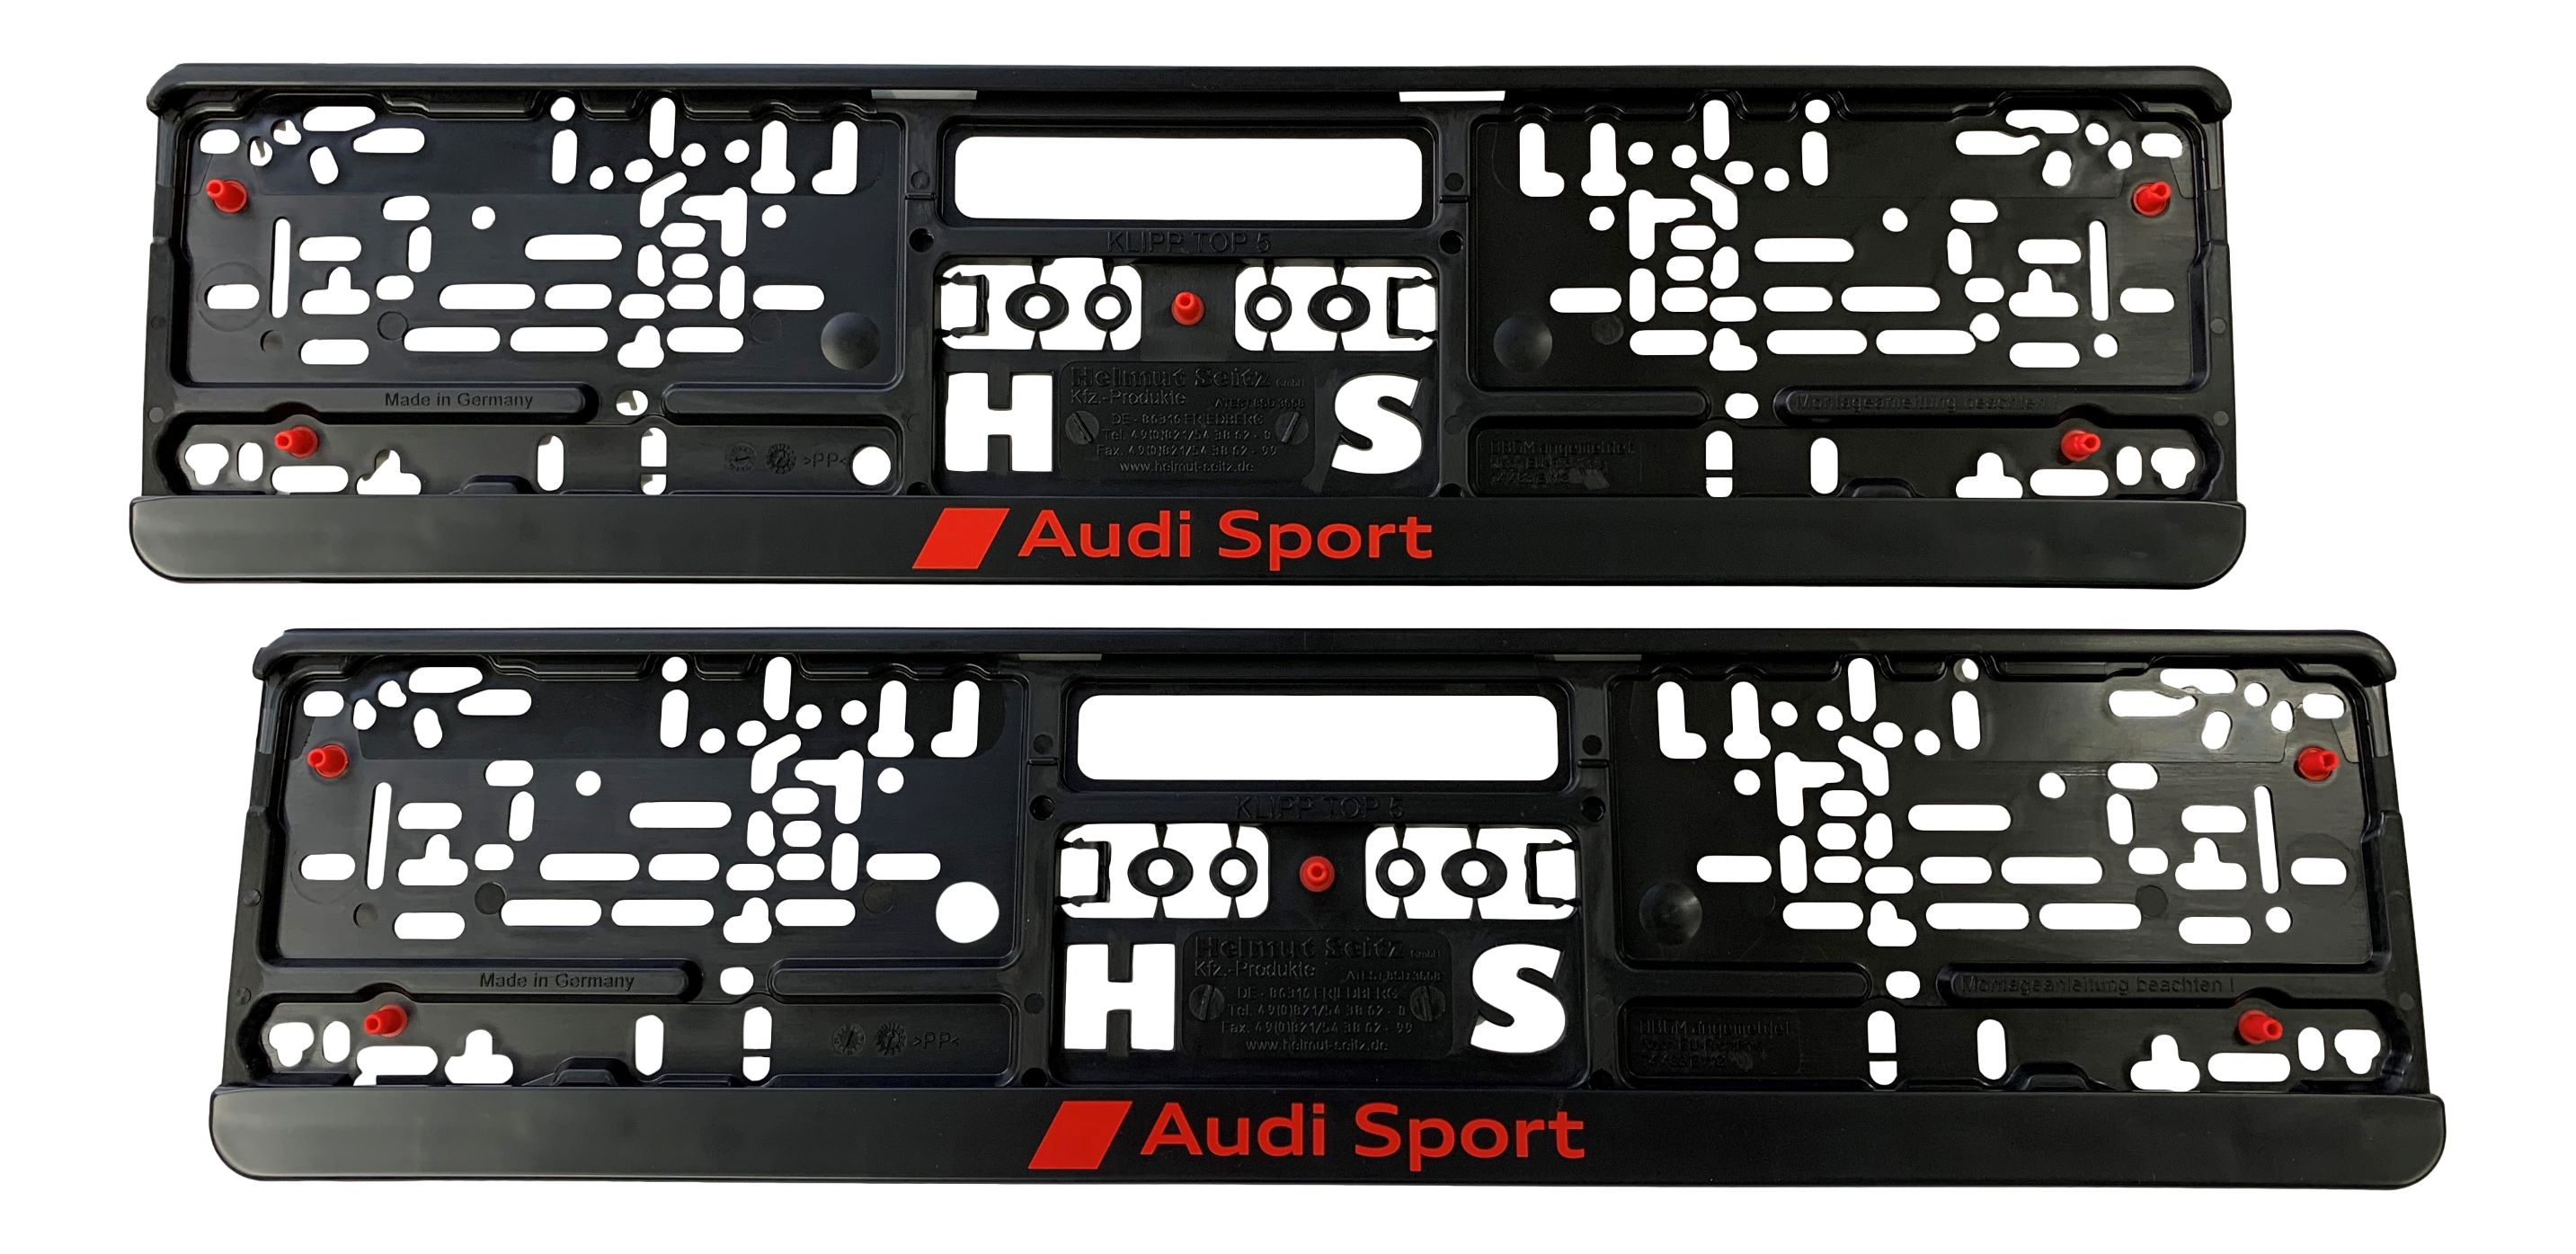 2x Original Audi Sport Premium License Plate Holder for all Vehicles